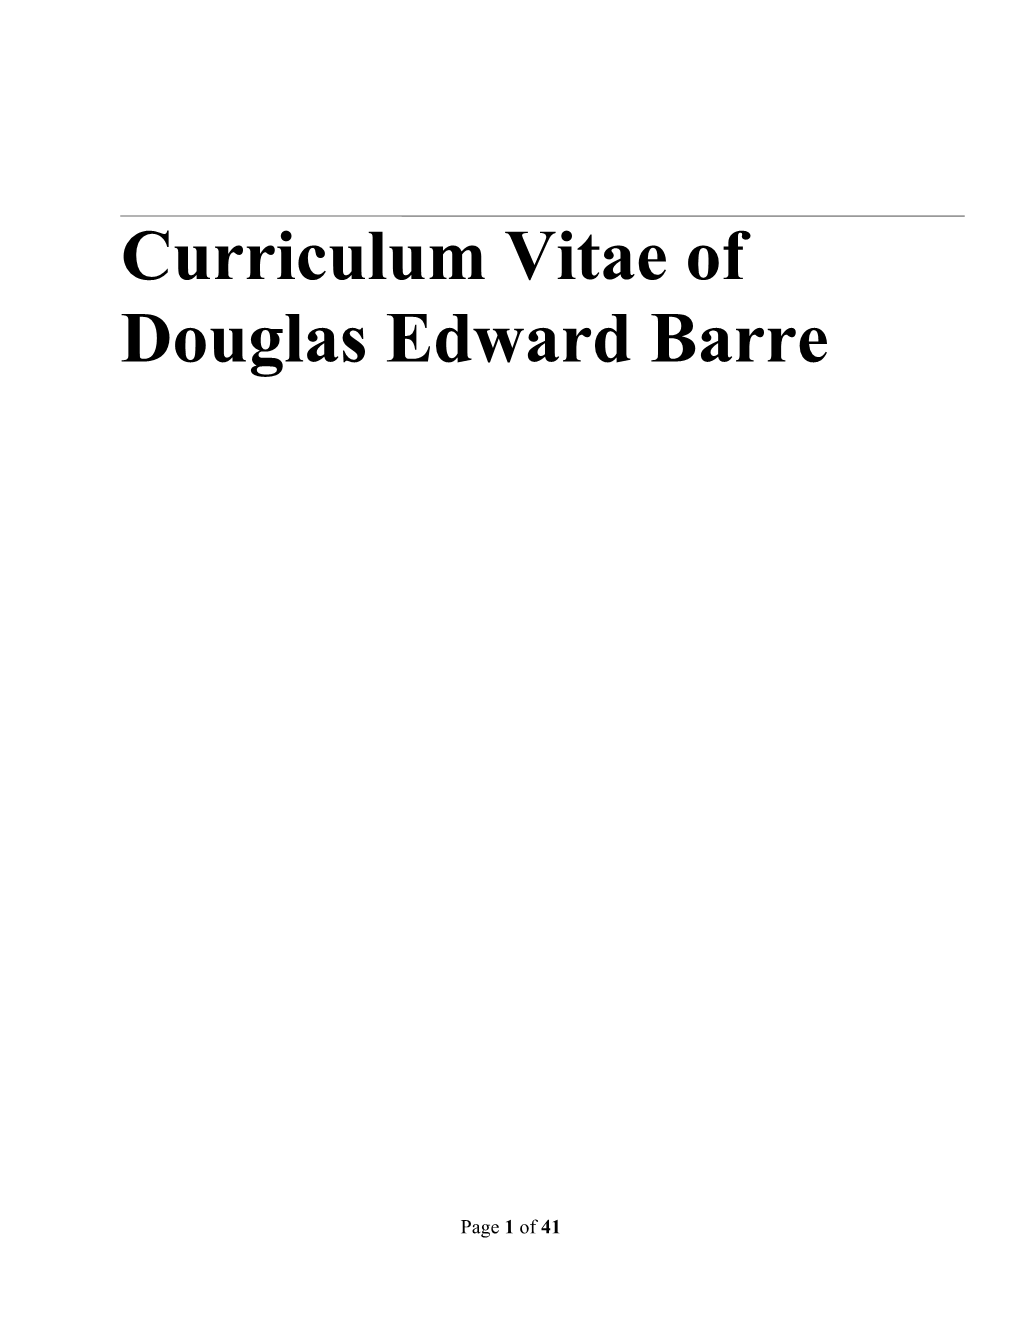 Curriculum Vitae Douglas Edward Barre